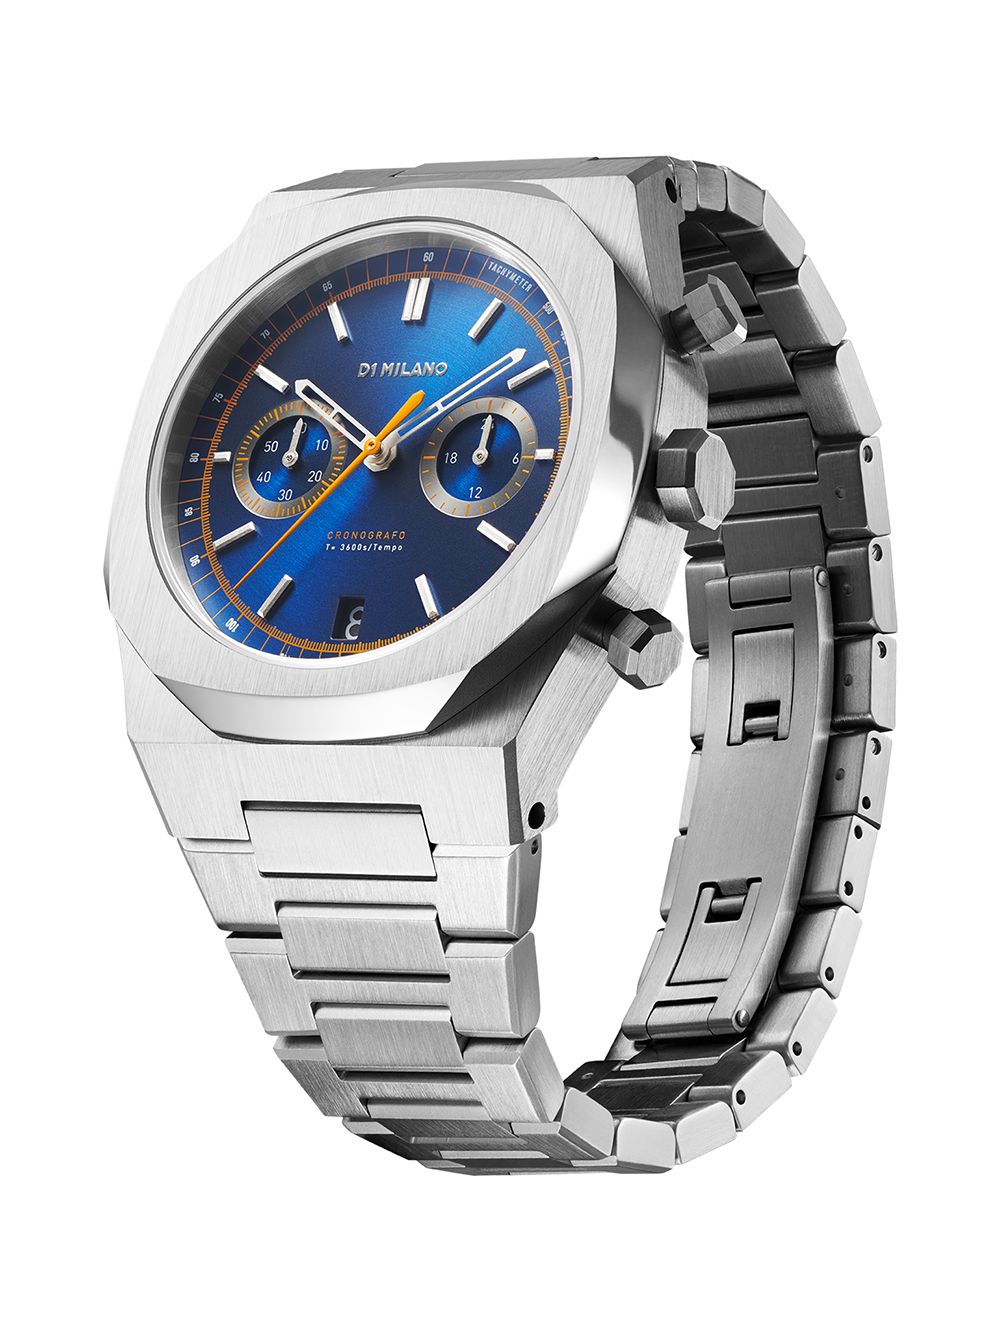 D1 Milano Royal Blue Chronograph horloge - Blauw